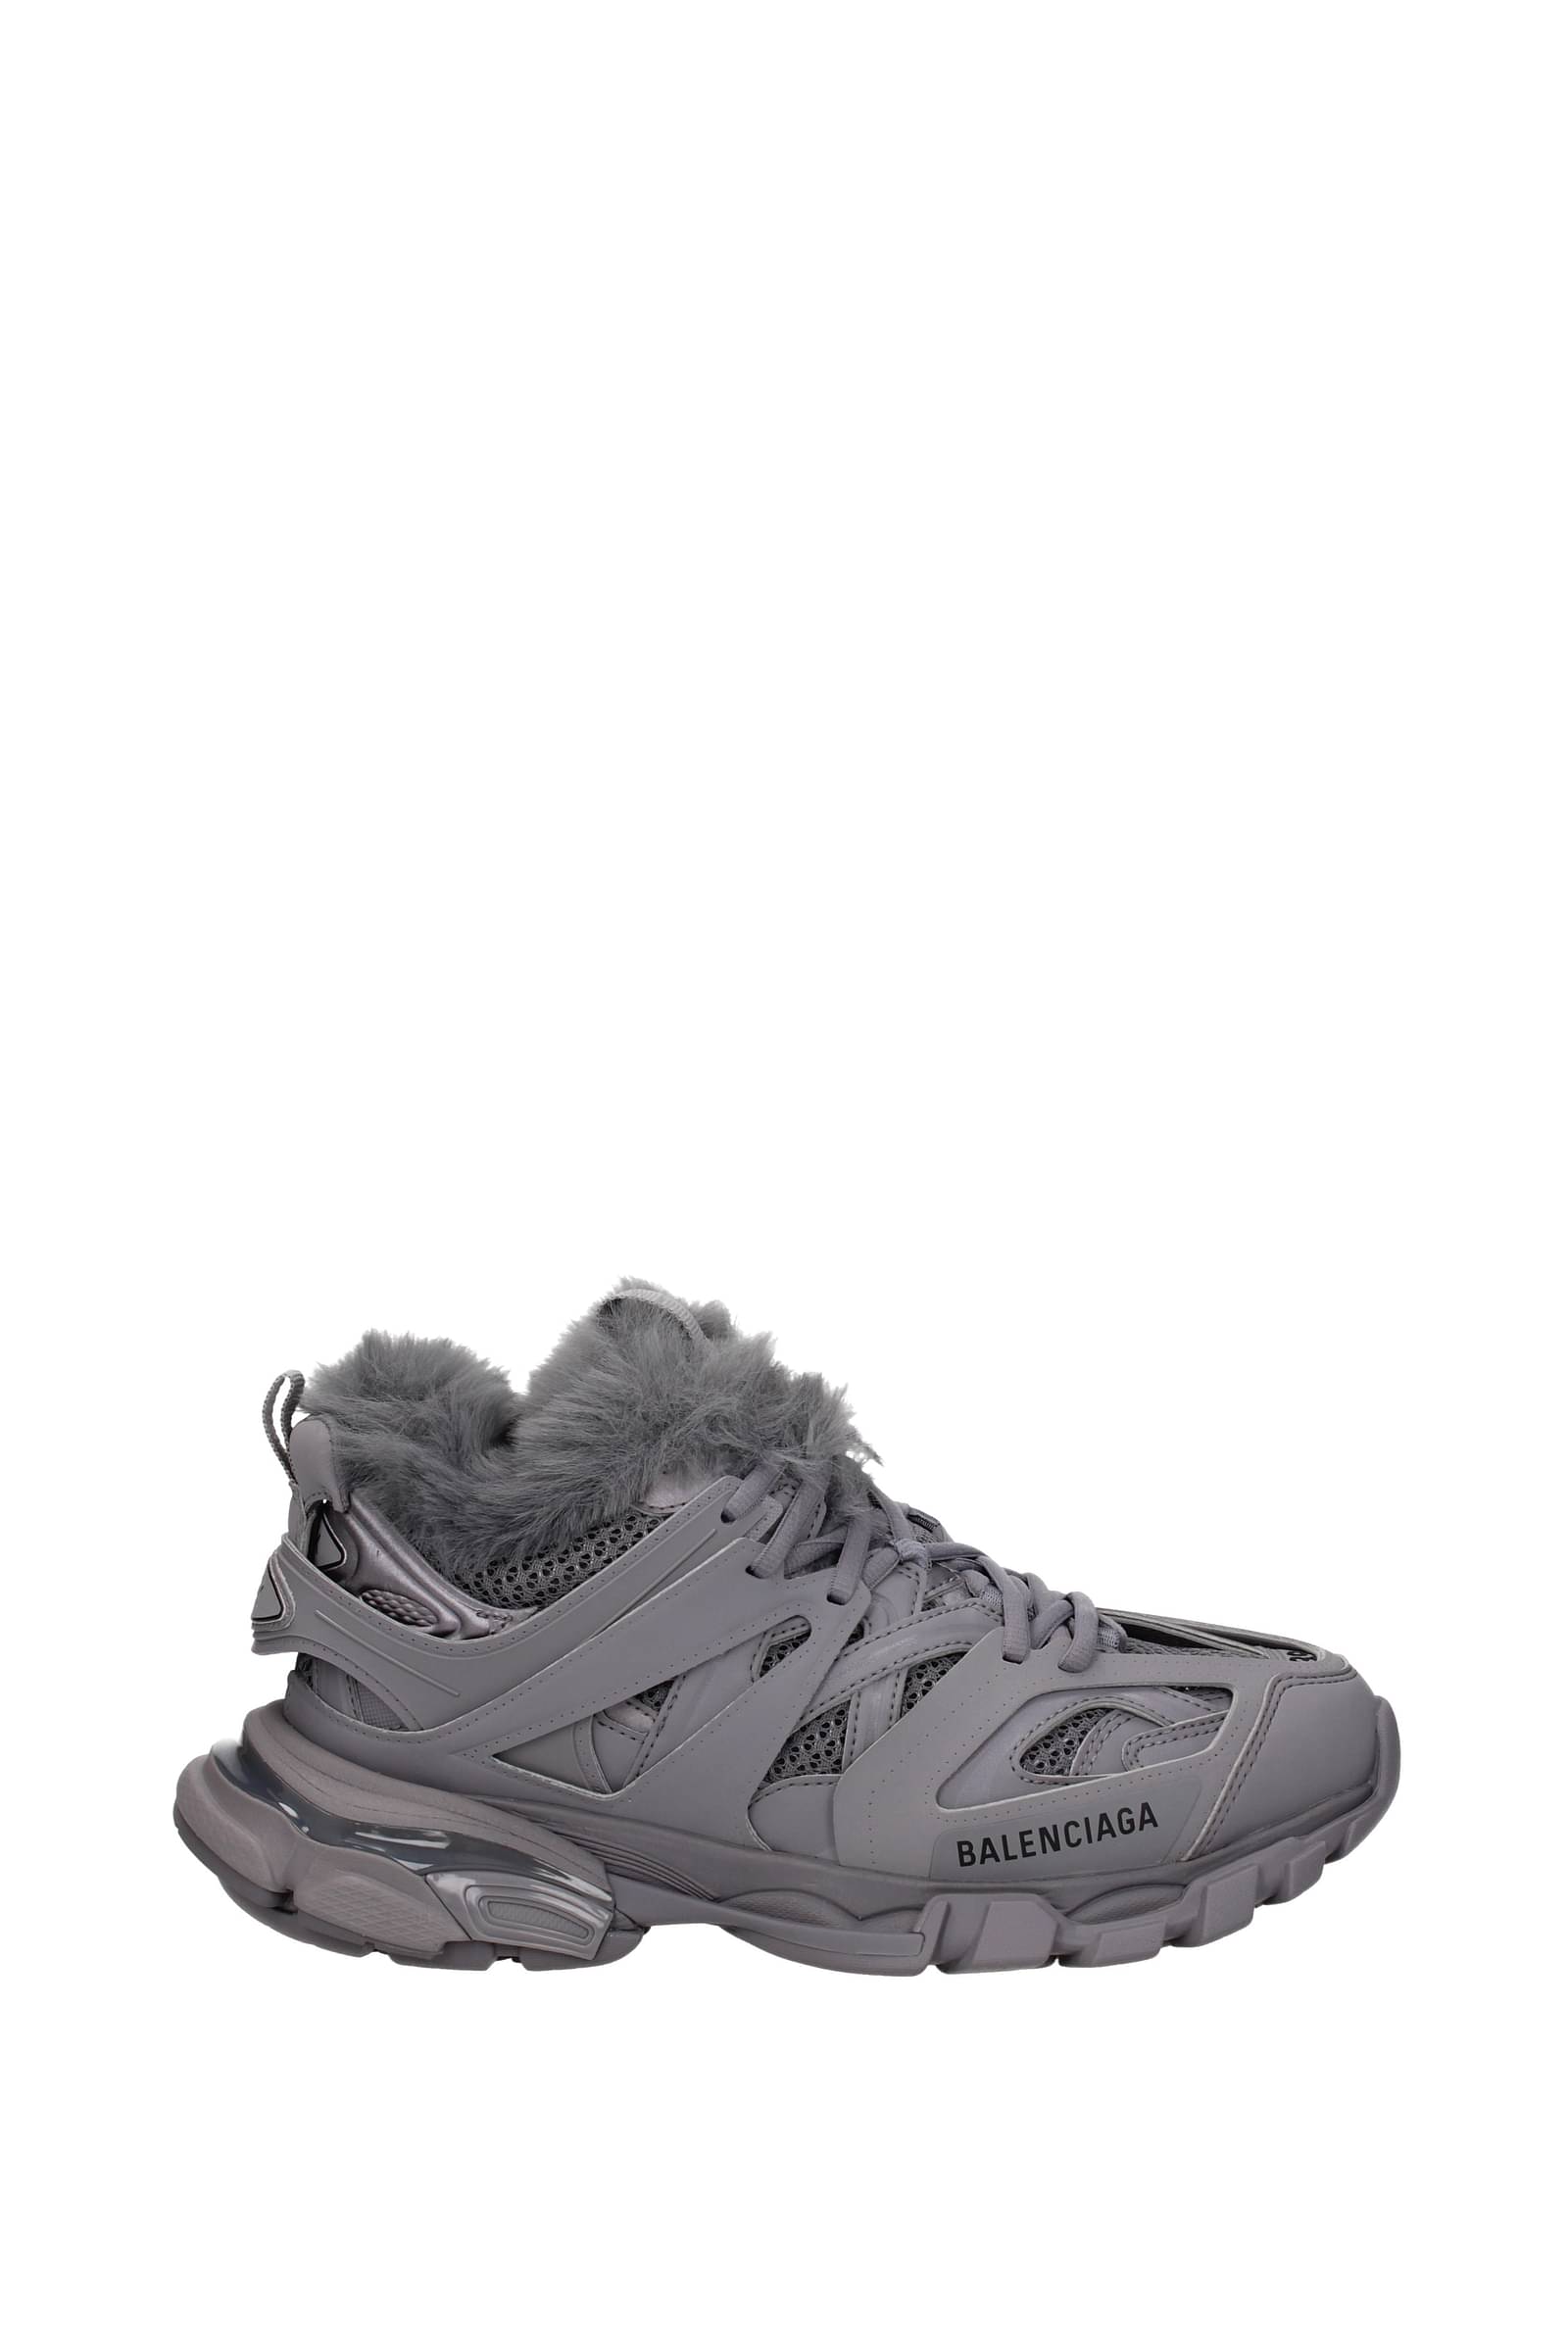 Balenciaga Sneakers track Men 668556W3CQ11800 Fabric Gray 469,88€